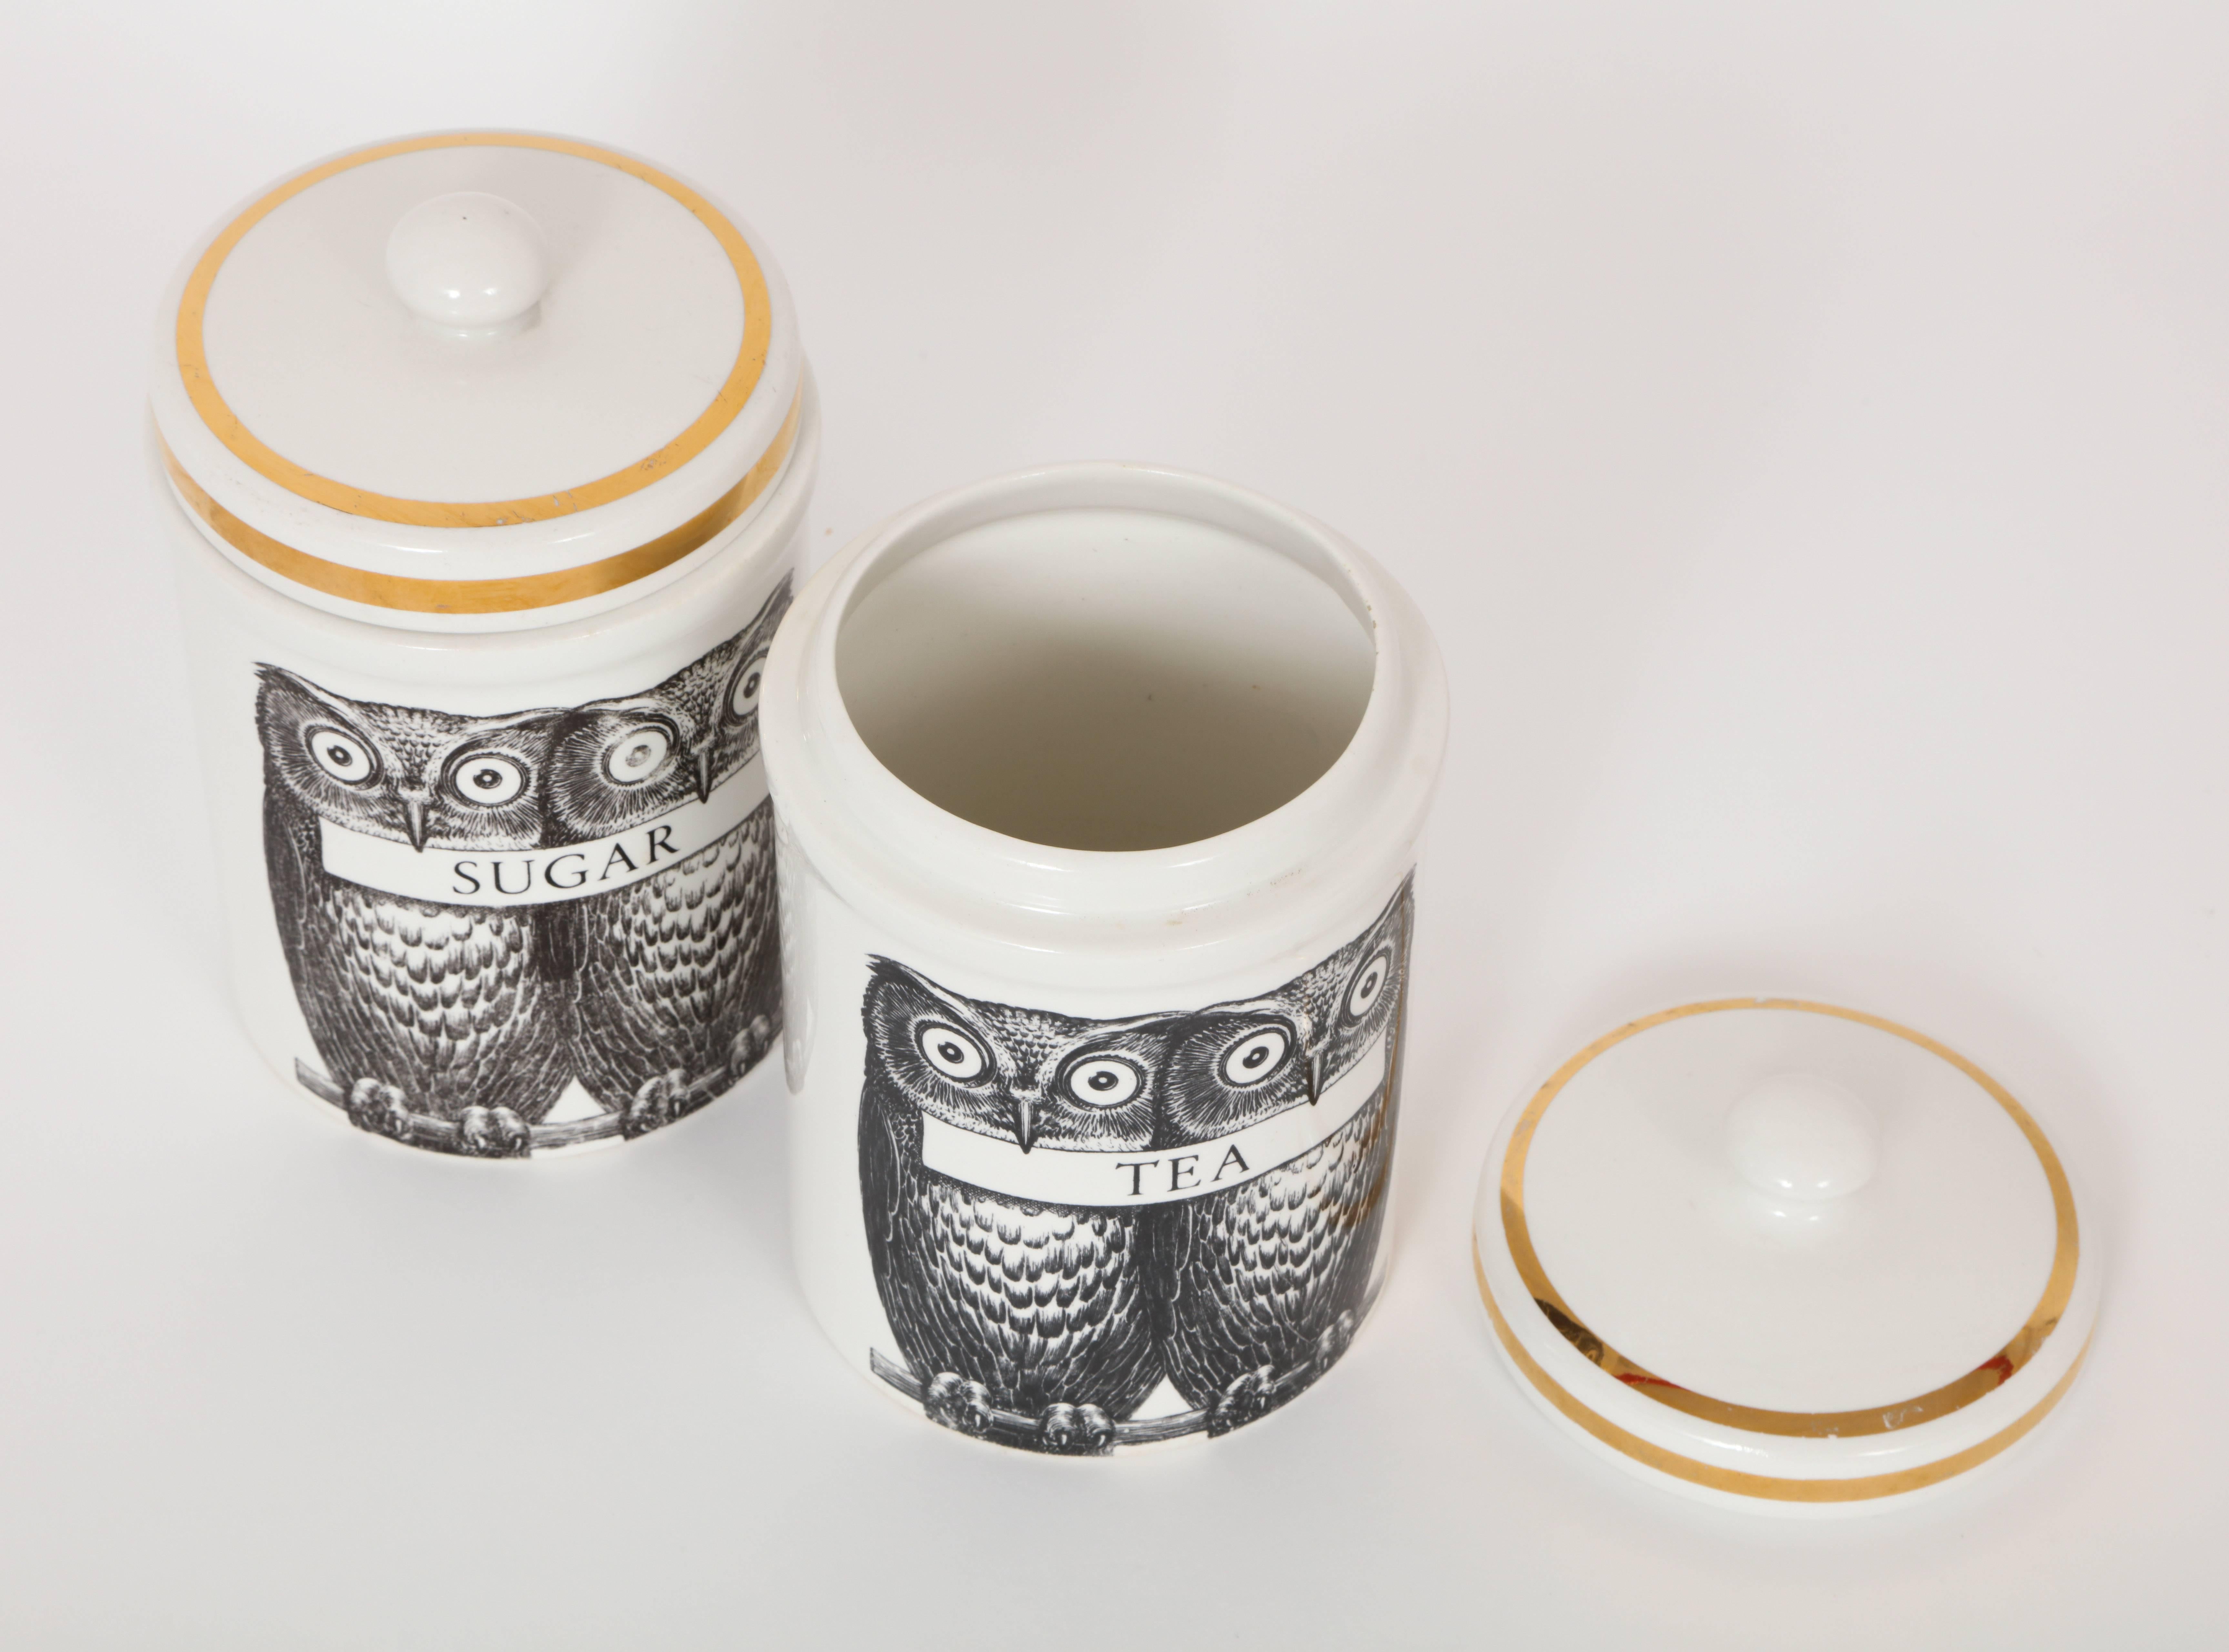 Italian Fornasetti Porcelain Owl Canisters Tea and Sugar, Mid Century 1950